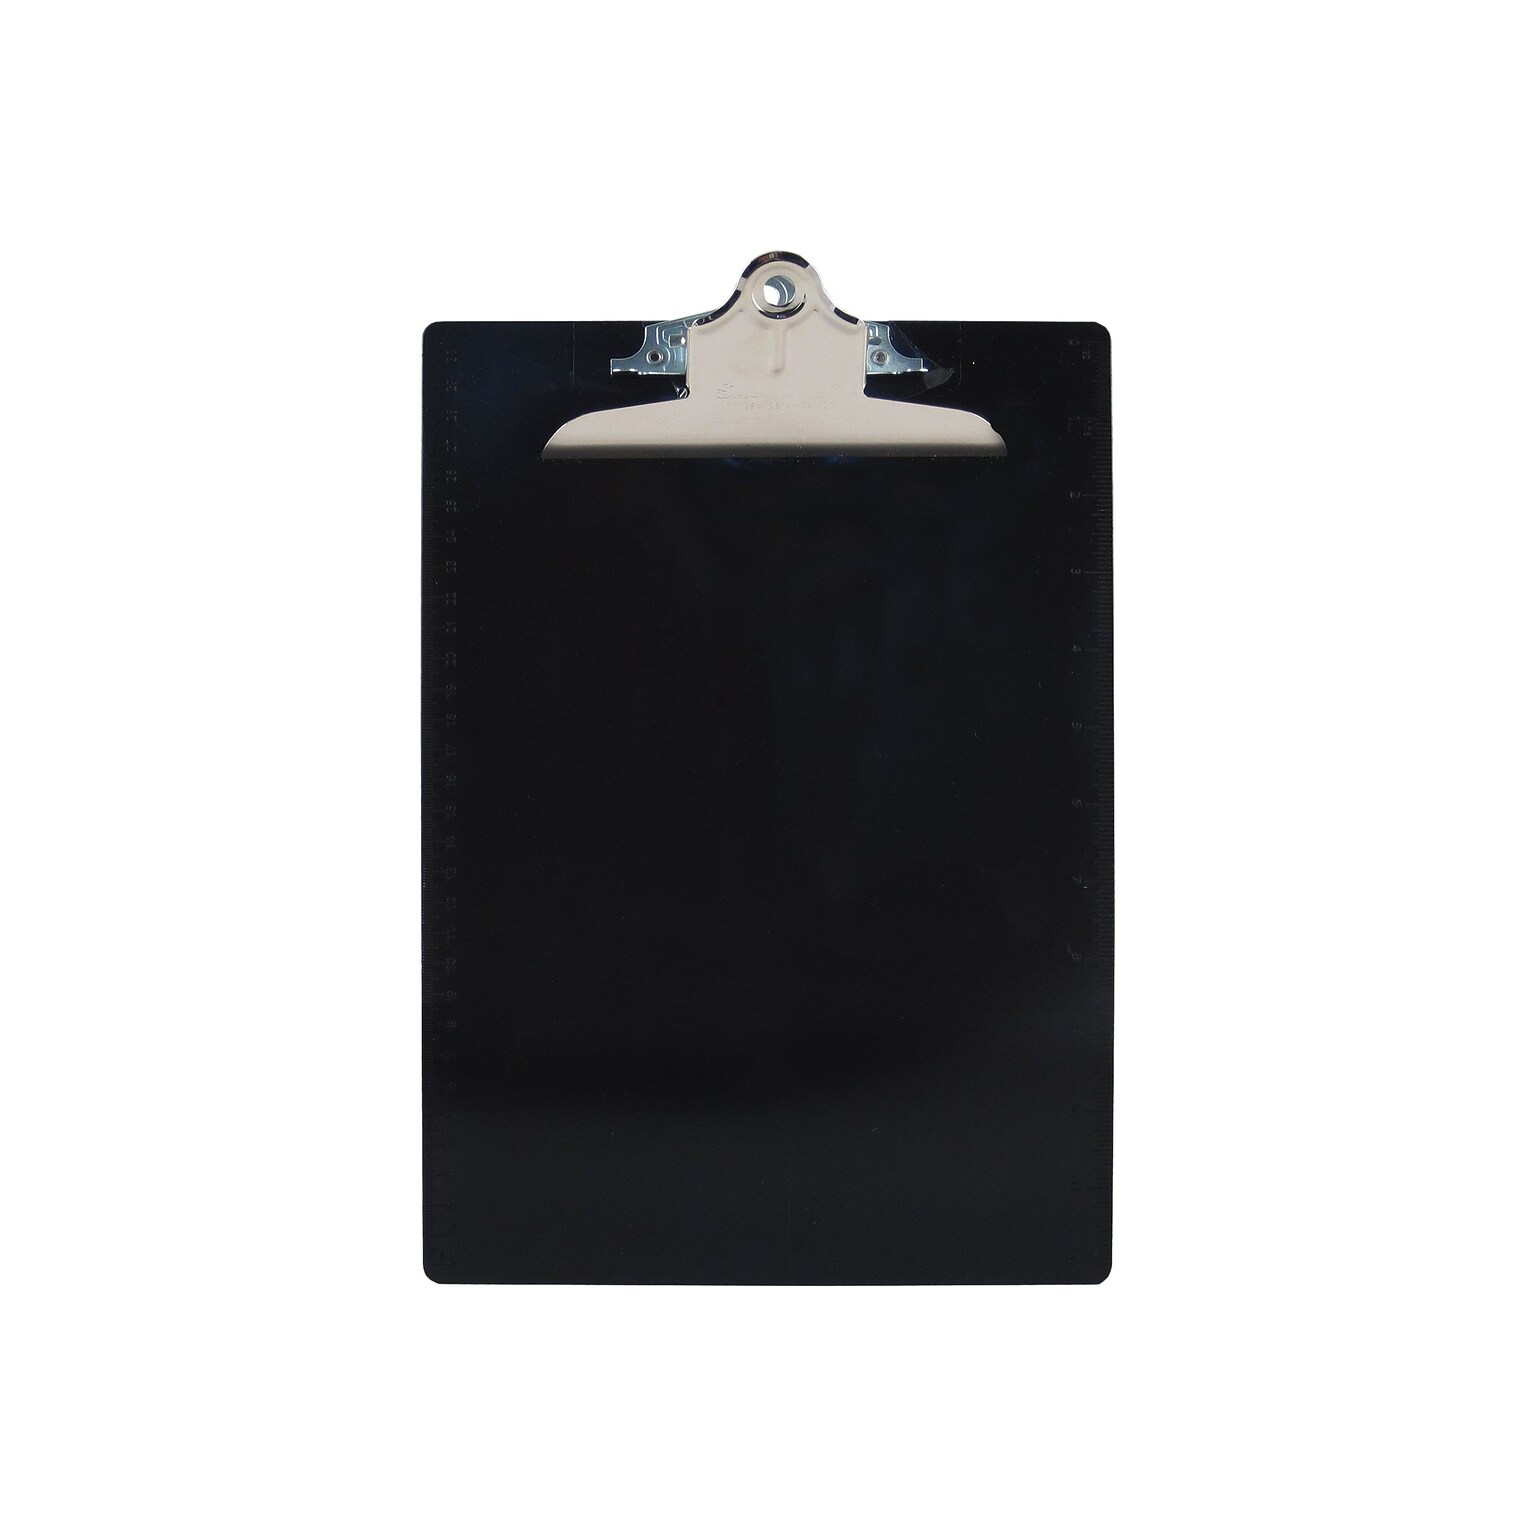 Saunders US-Works Plastic Clipboard, Letter Size, Black (21603)